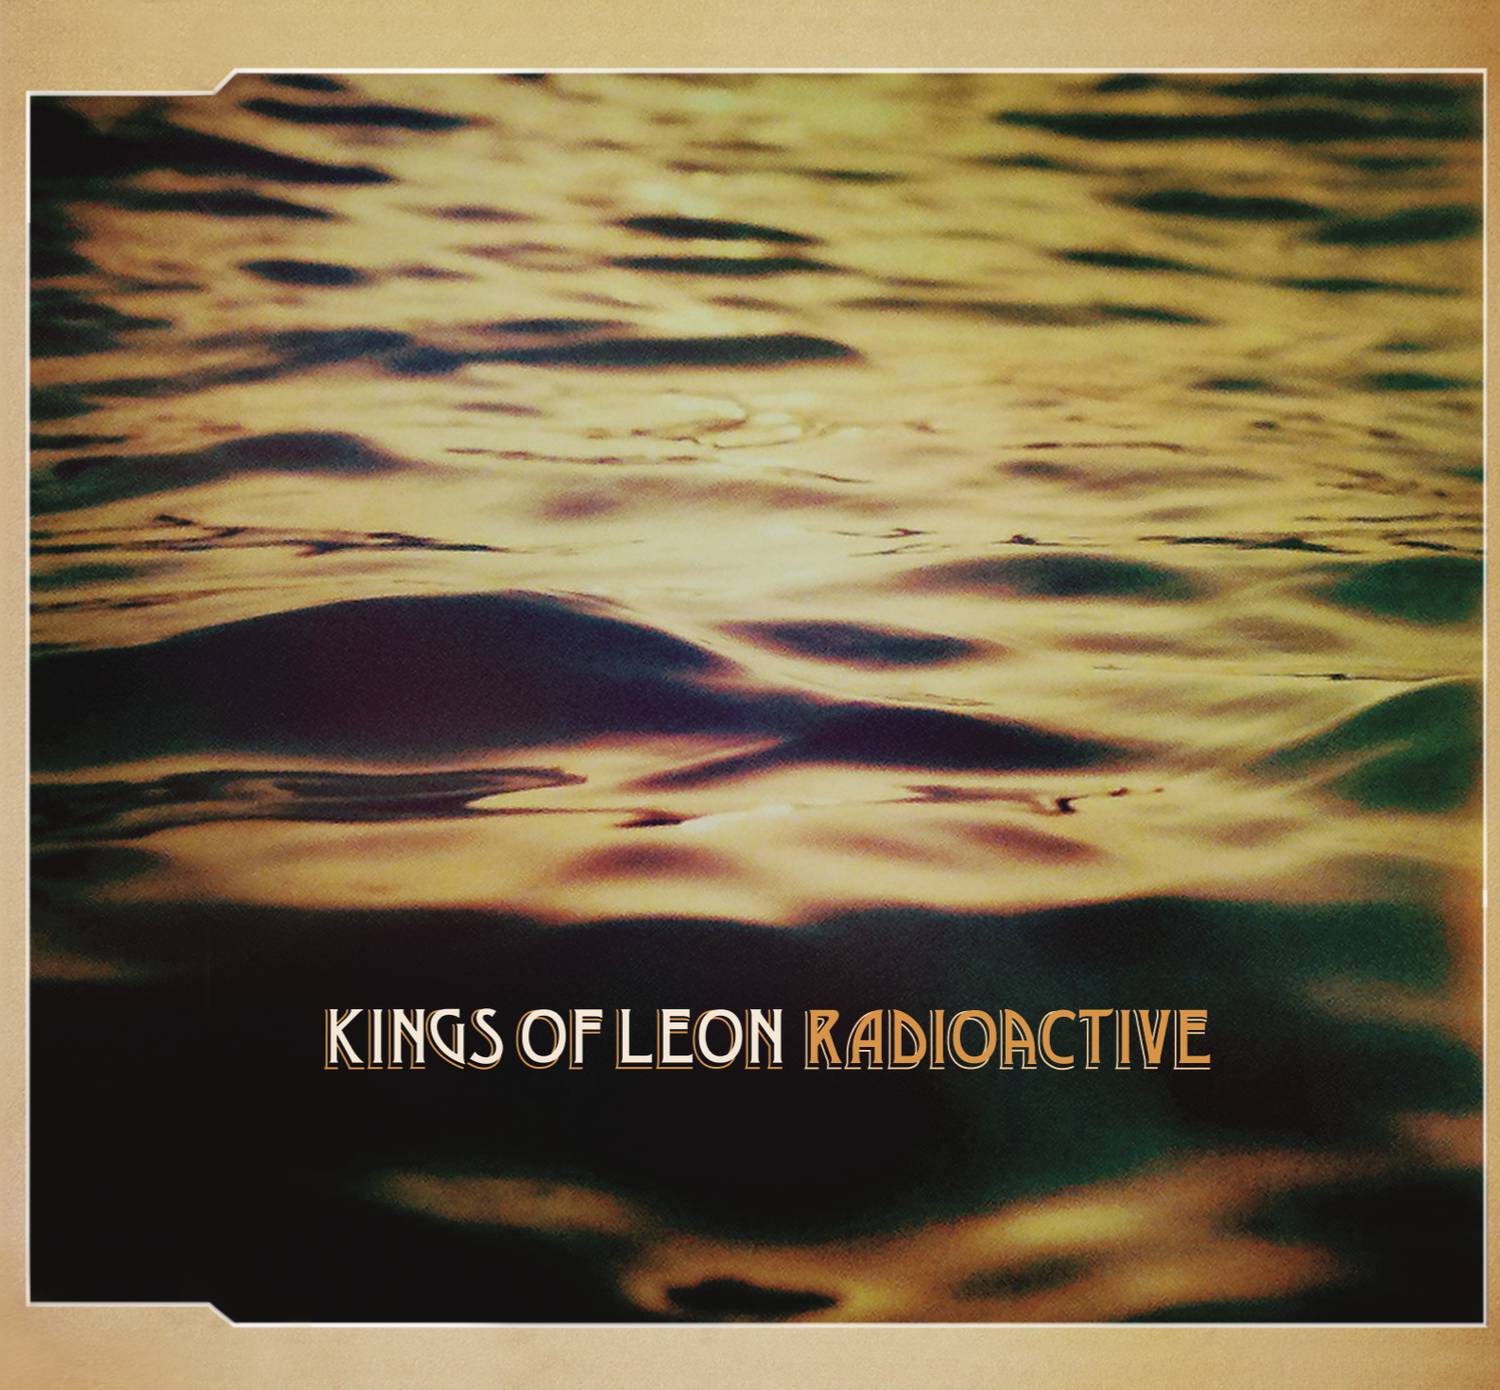 Radioactive kings of leon lyrics